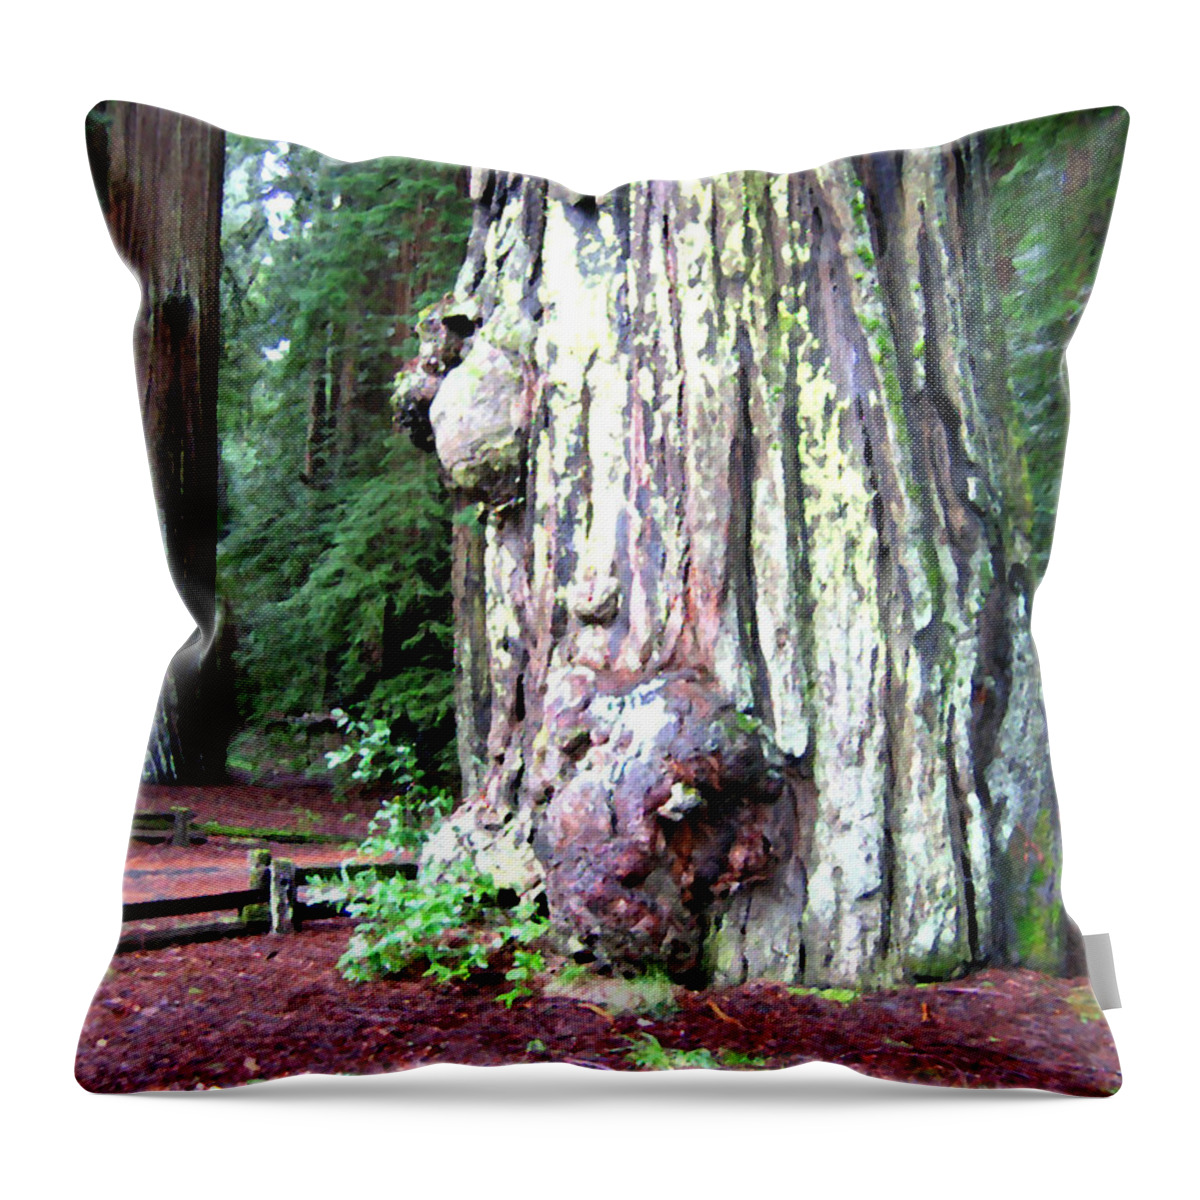 California Redwoods 4 Throw Pillow featuring the digital art California Redwoods 4 by Will Borden